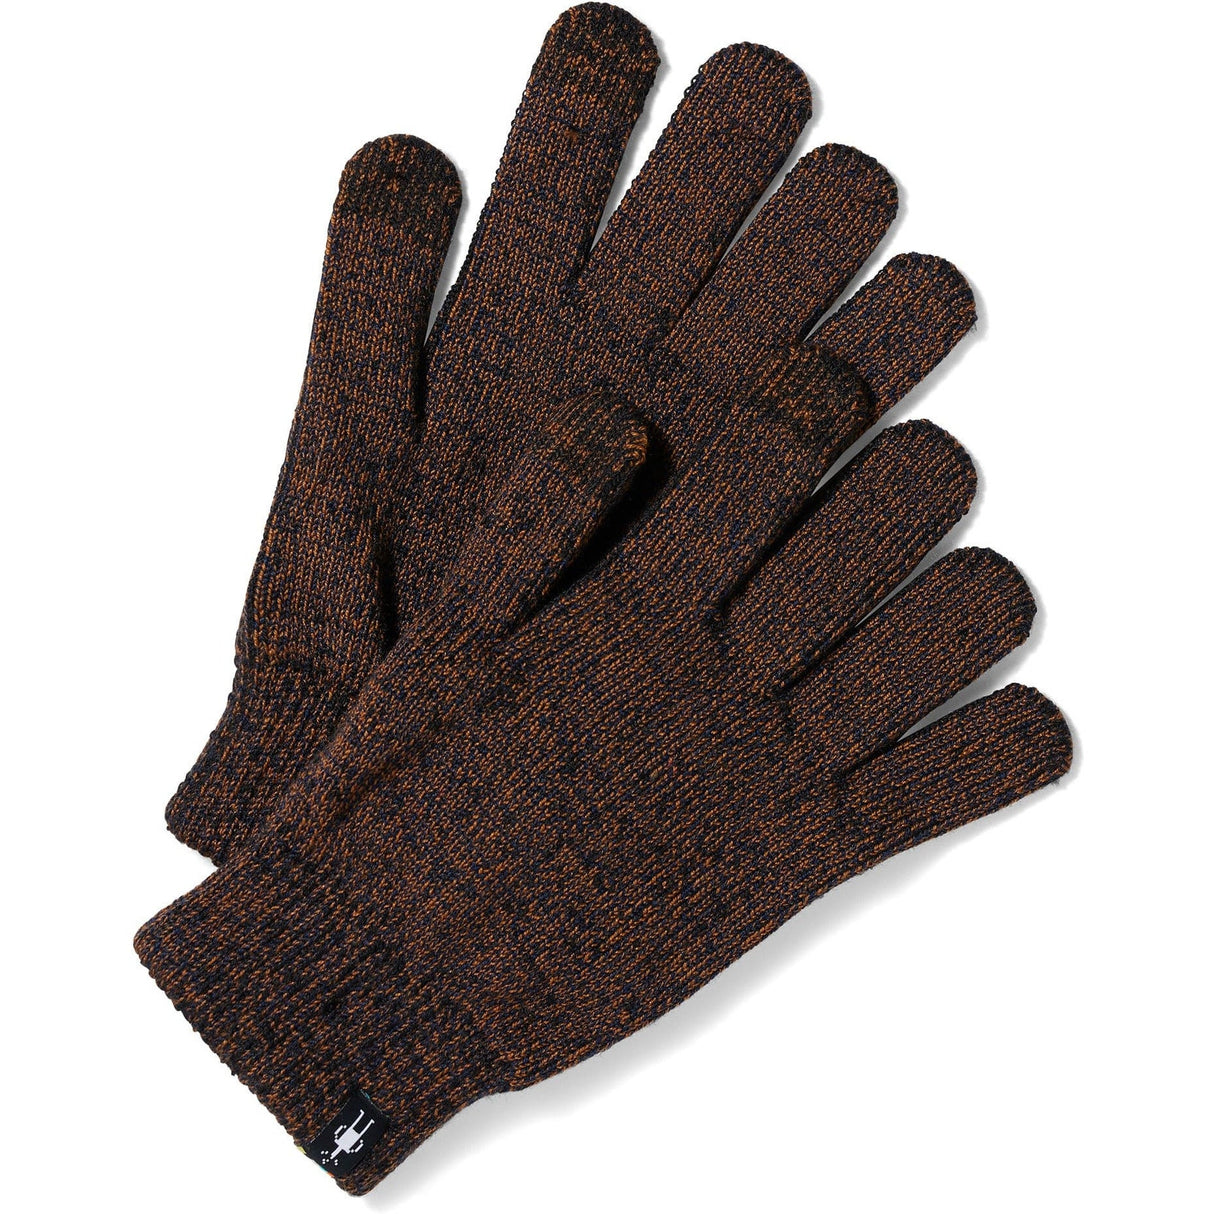 Smartwool Cozy Glove  -  Small/Medium / Fox Brown